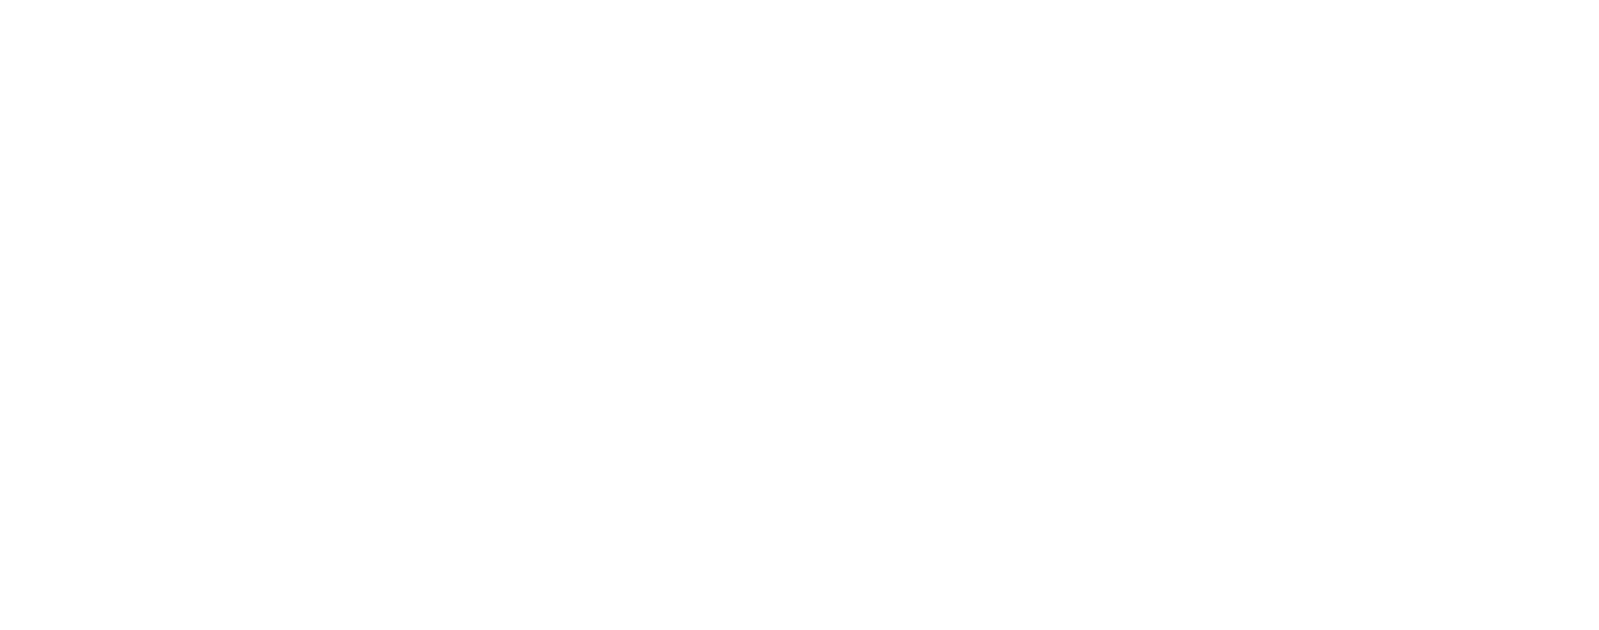 DZS Inc logo for dark backgrounds (transparent PNG)